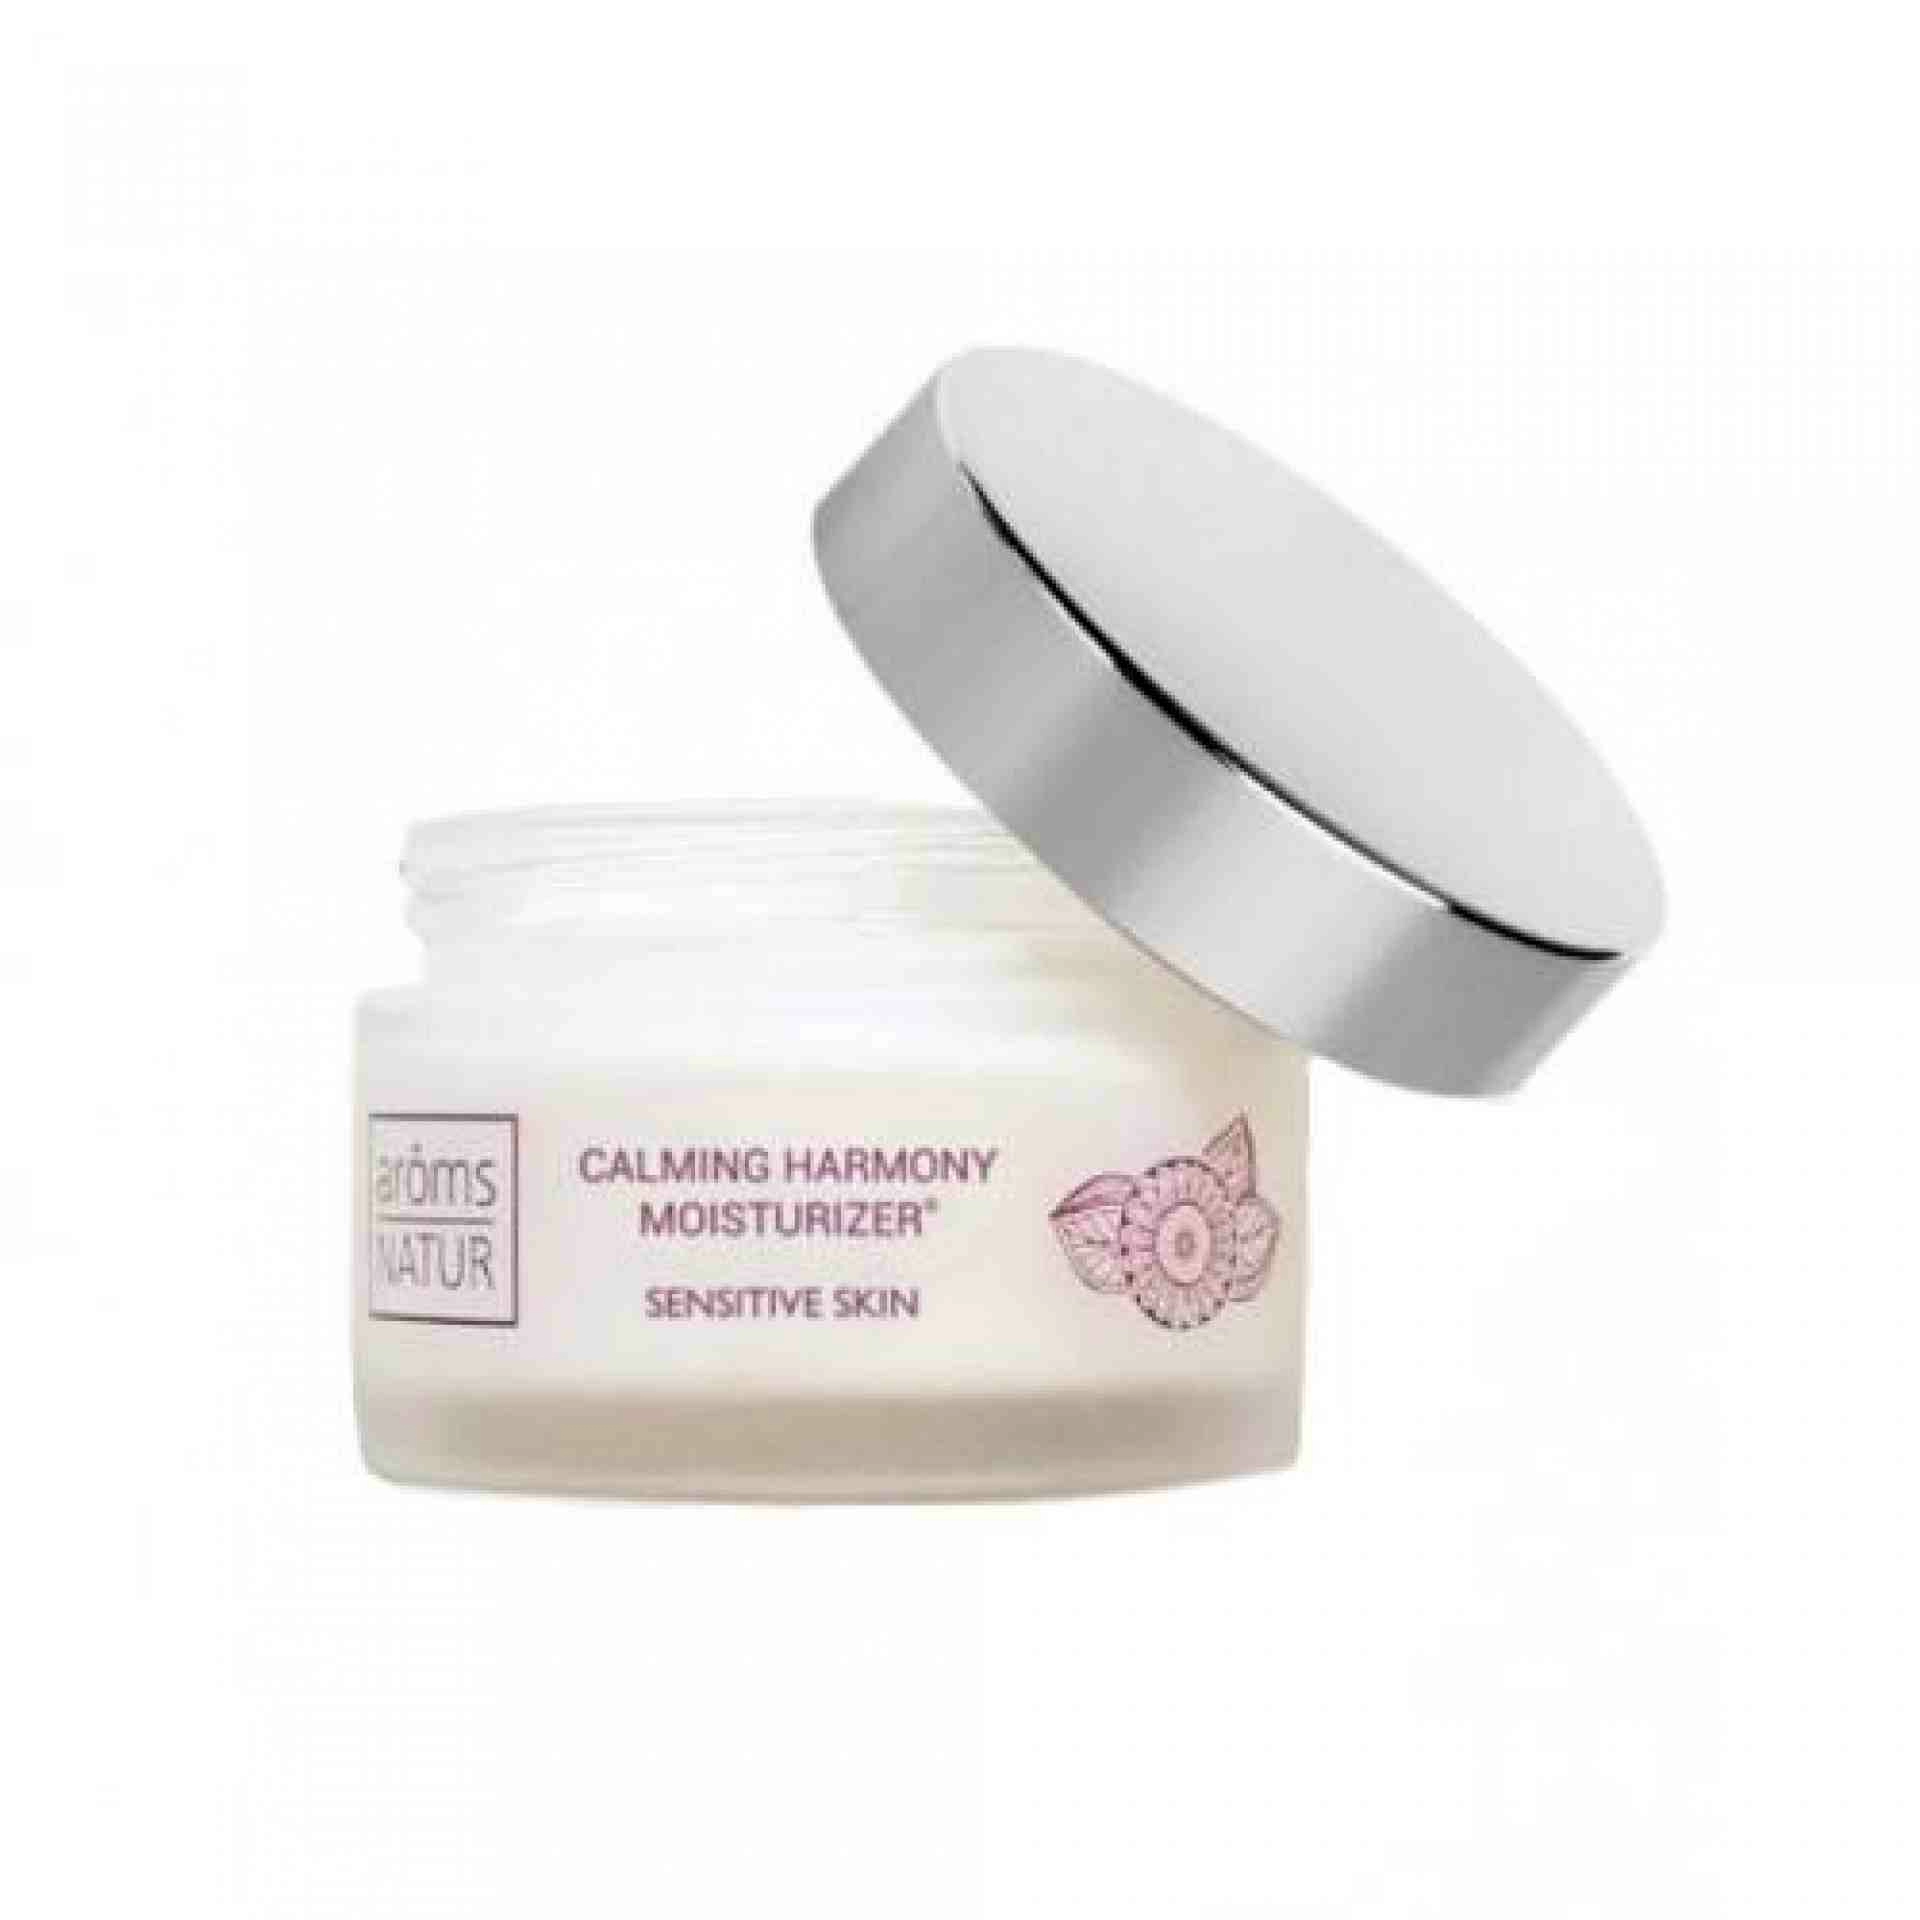 Calming Harmony Moisturizer | Crema para pieles sensibles 50ml - Happiness Cosmetics - Arôms Natur ®